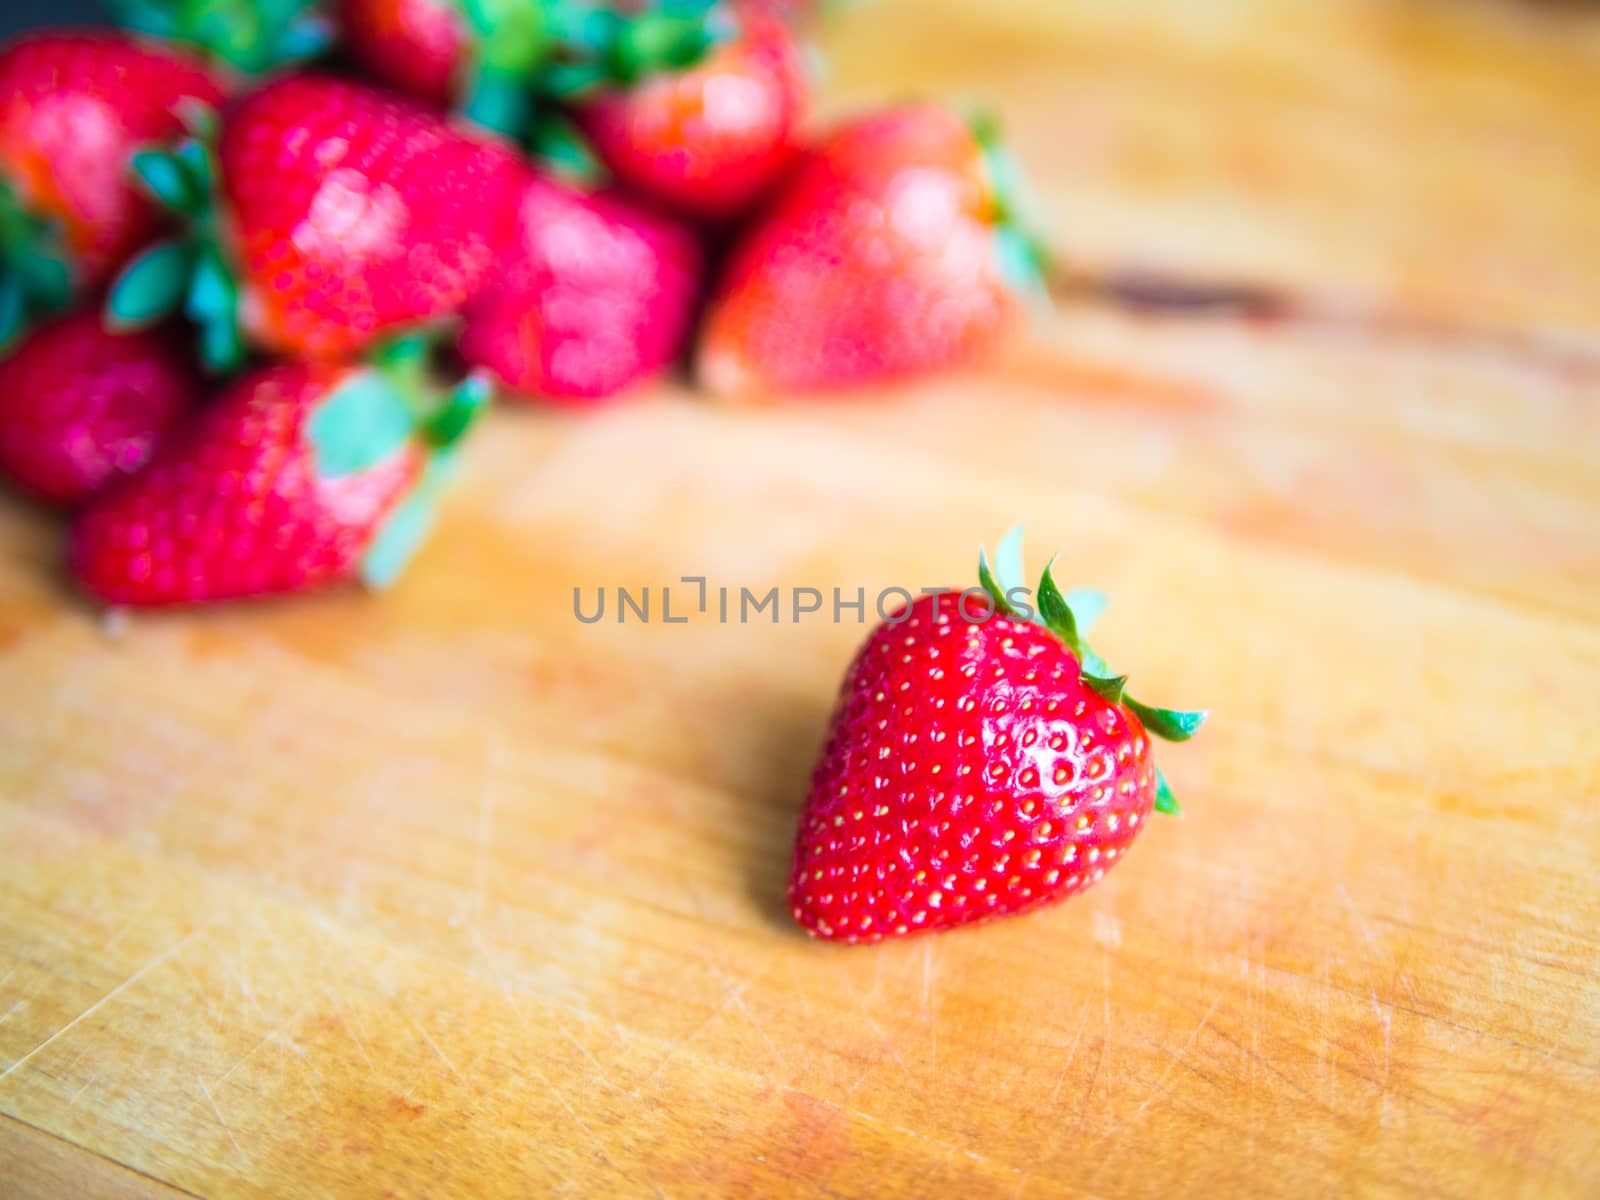 Strawberry on a wooden board by weruskak